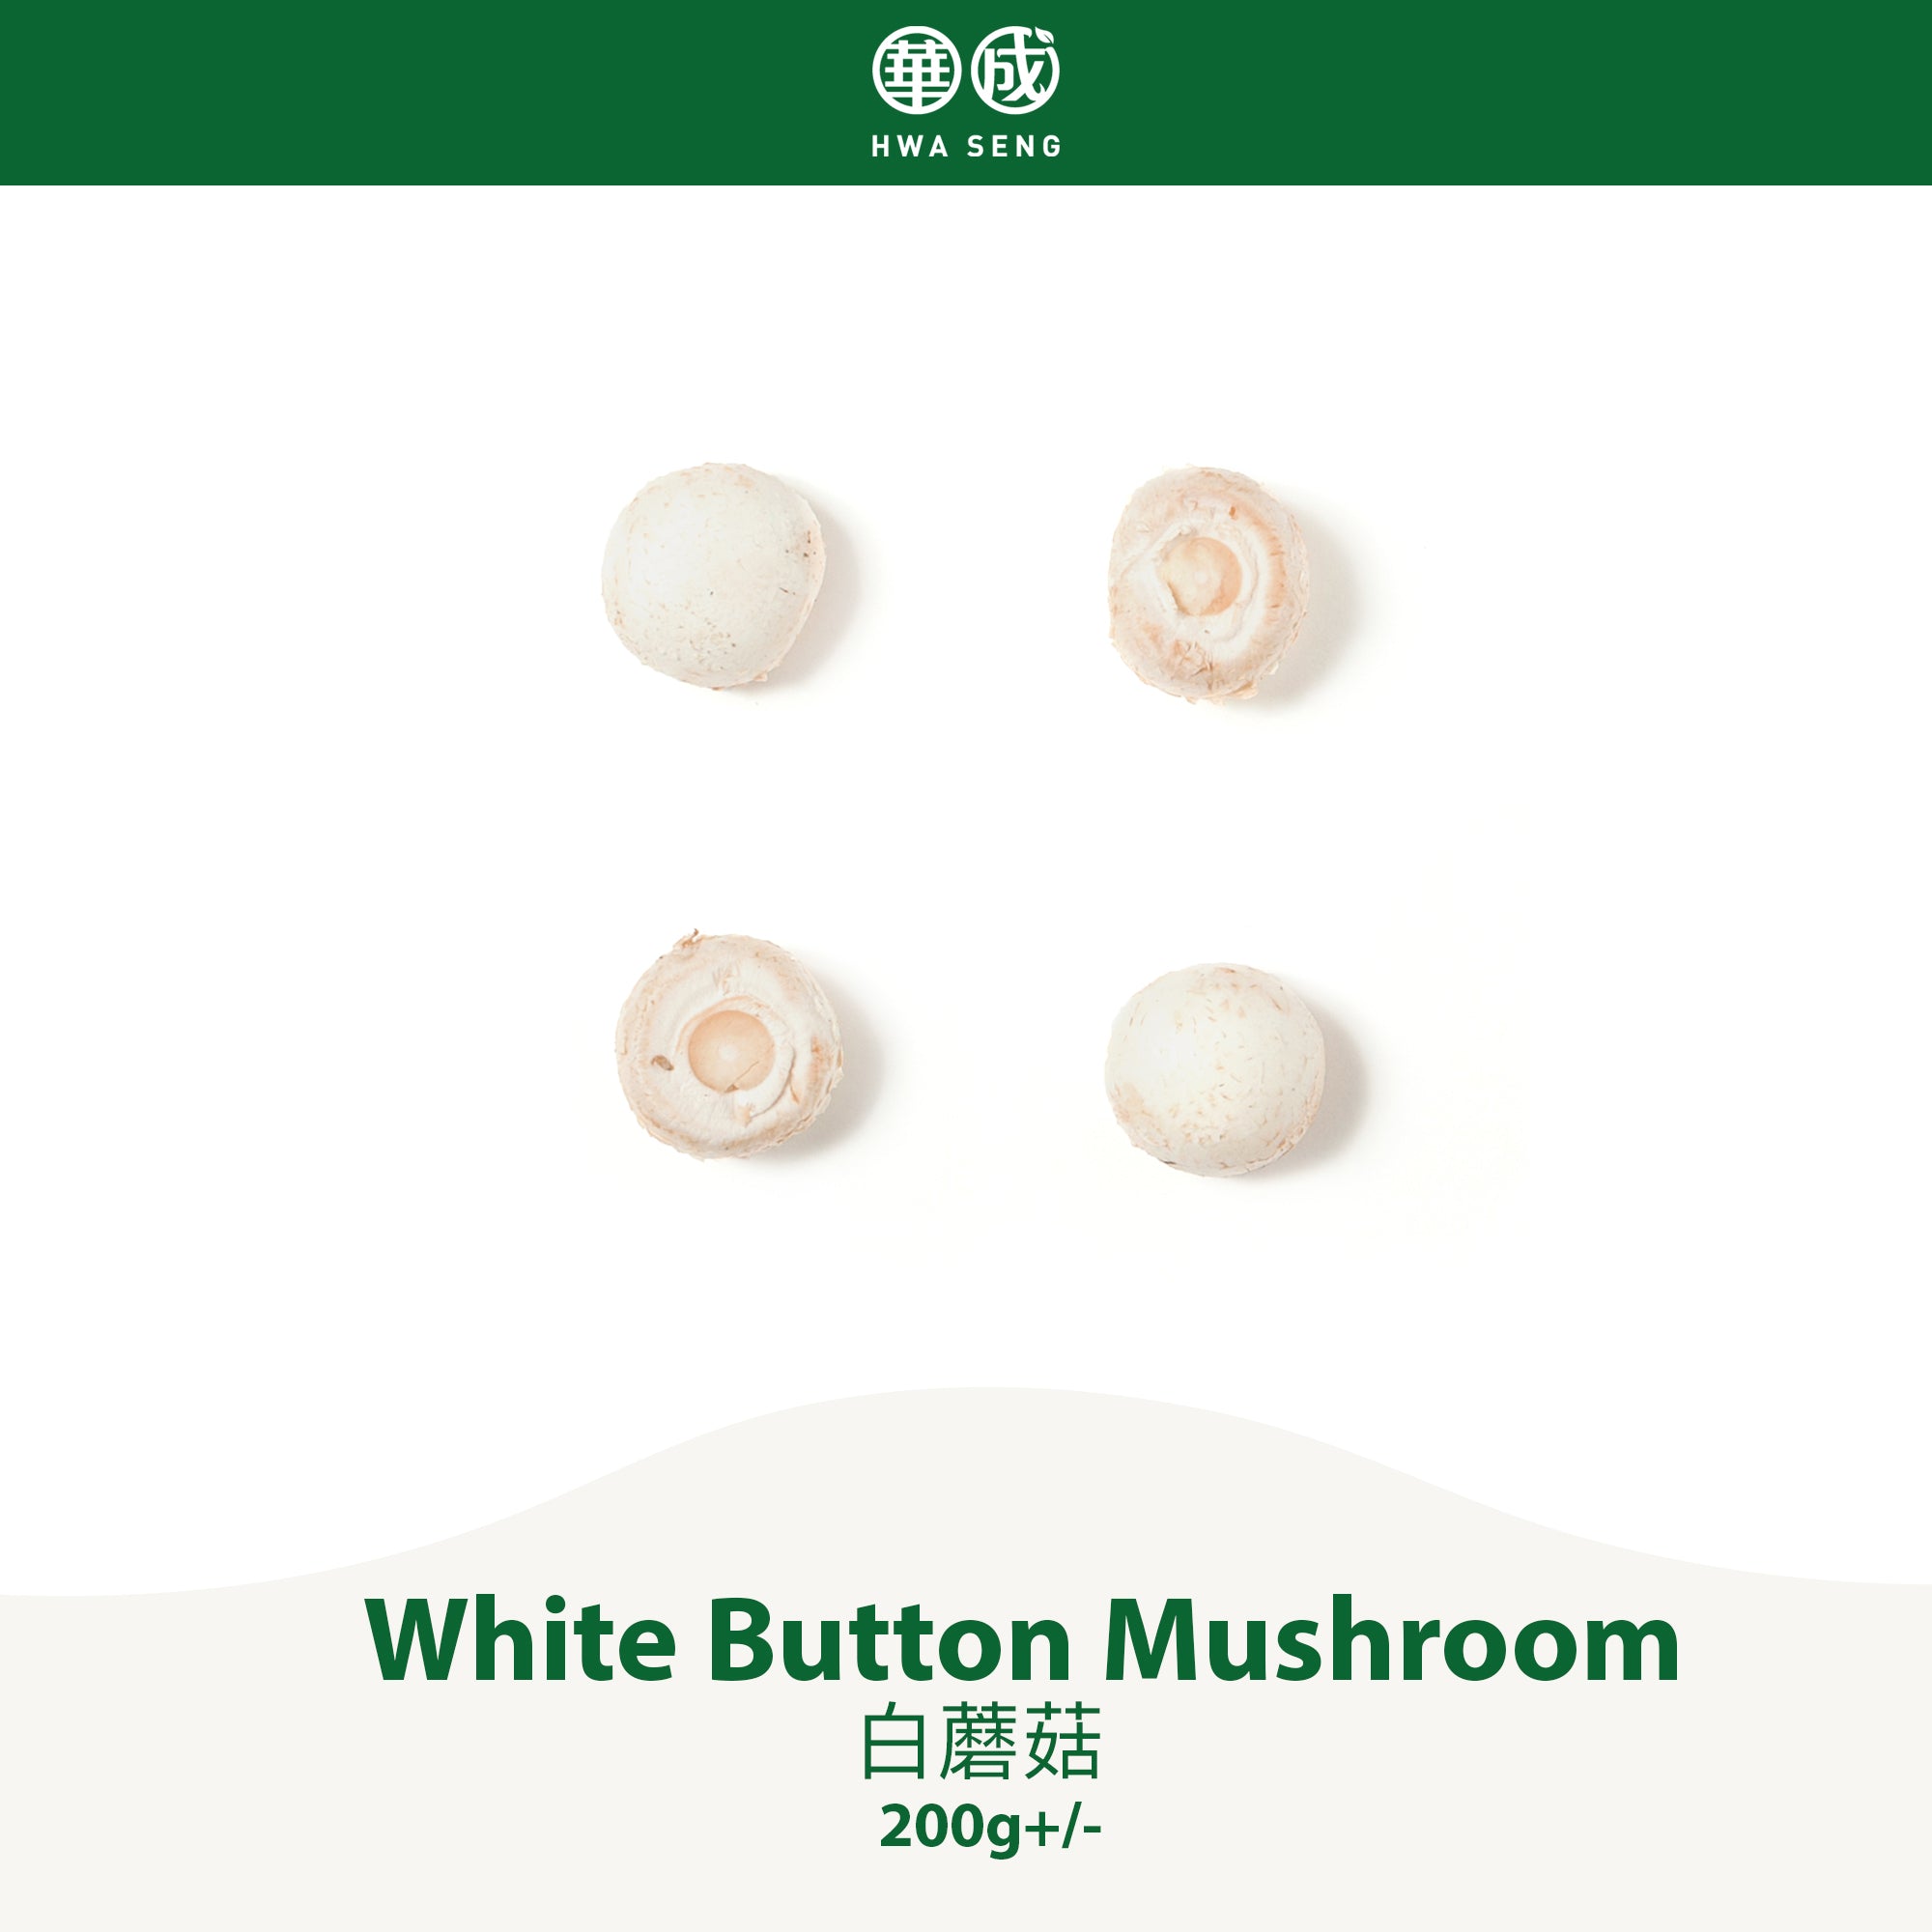 White Button Mushroom 白蘑菇 200g+/-